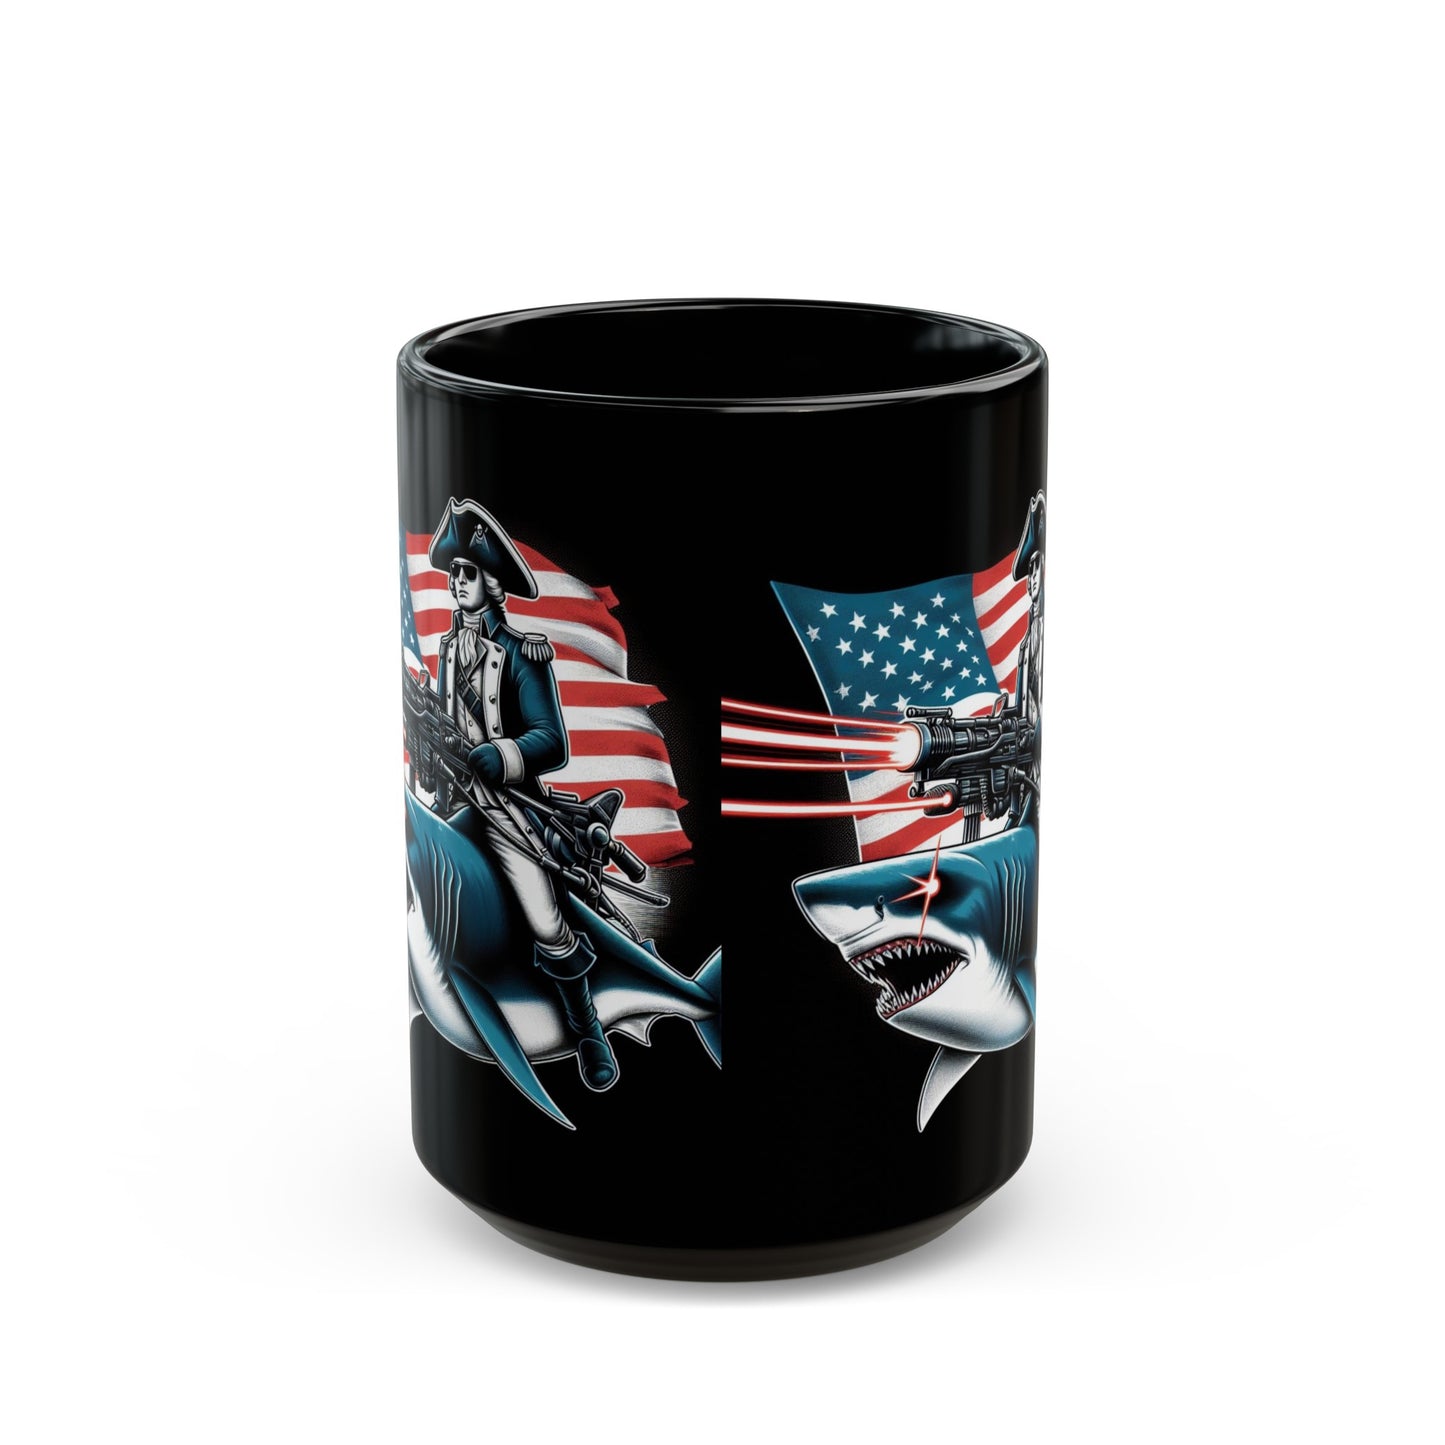 George Washington Riding a Laser Shark Coffee Mug